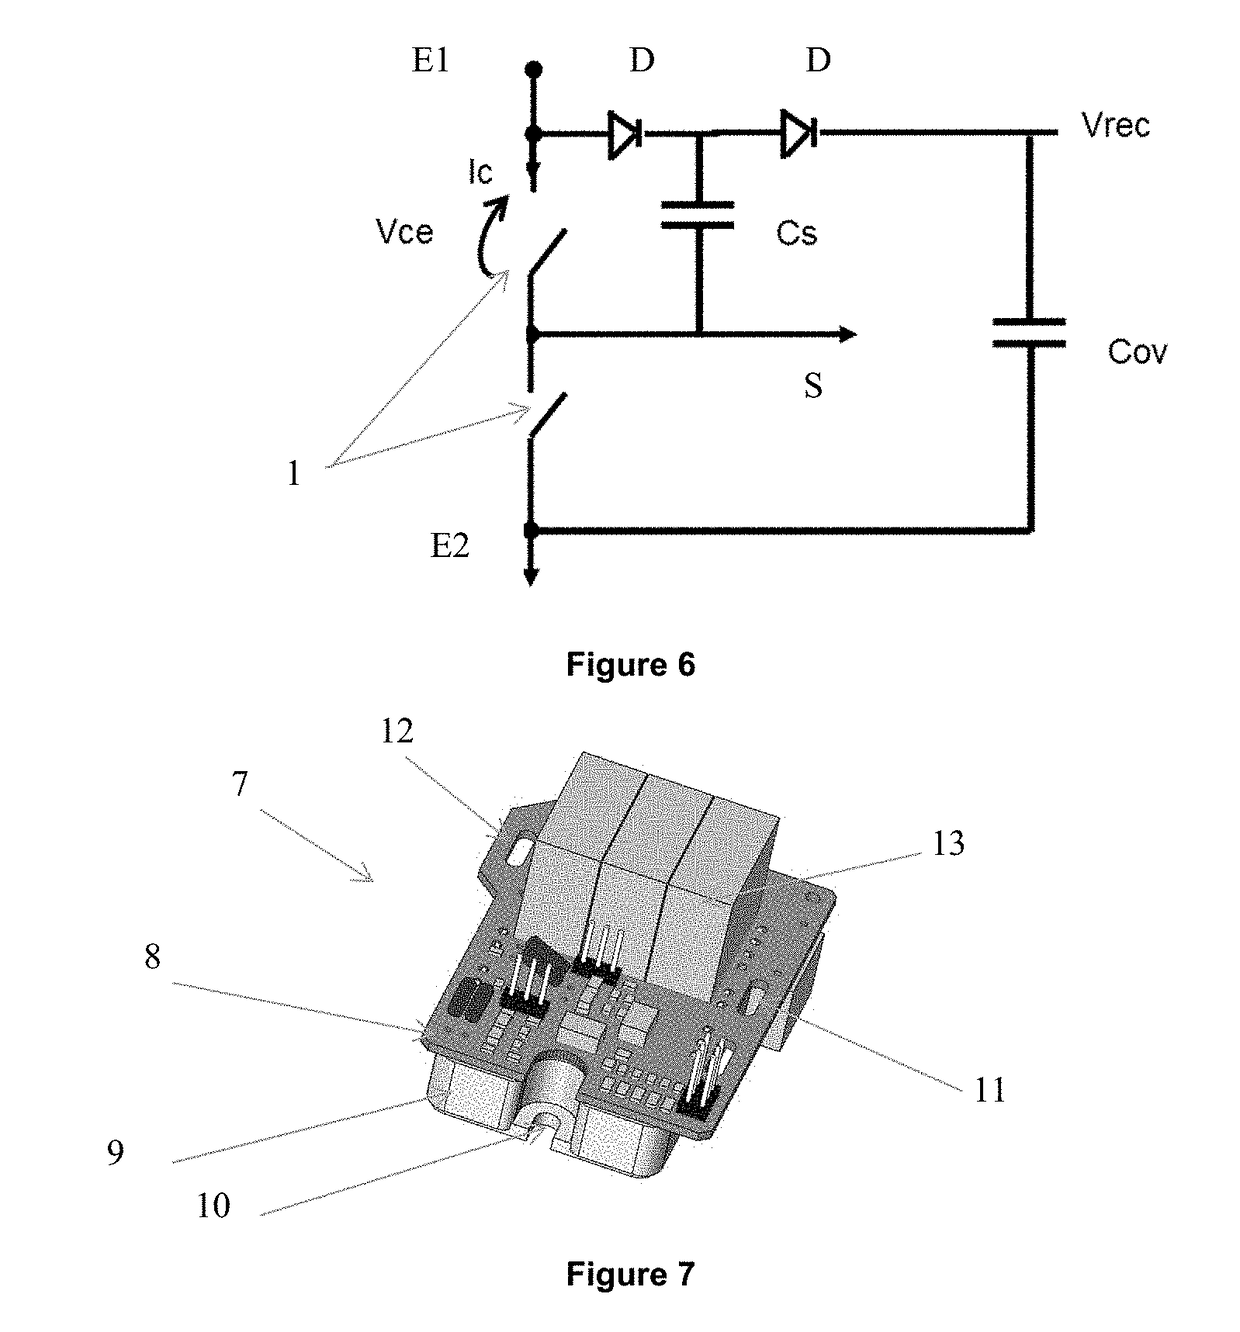 Regenerative undeland snubber circuit for half-arm of an inverter